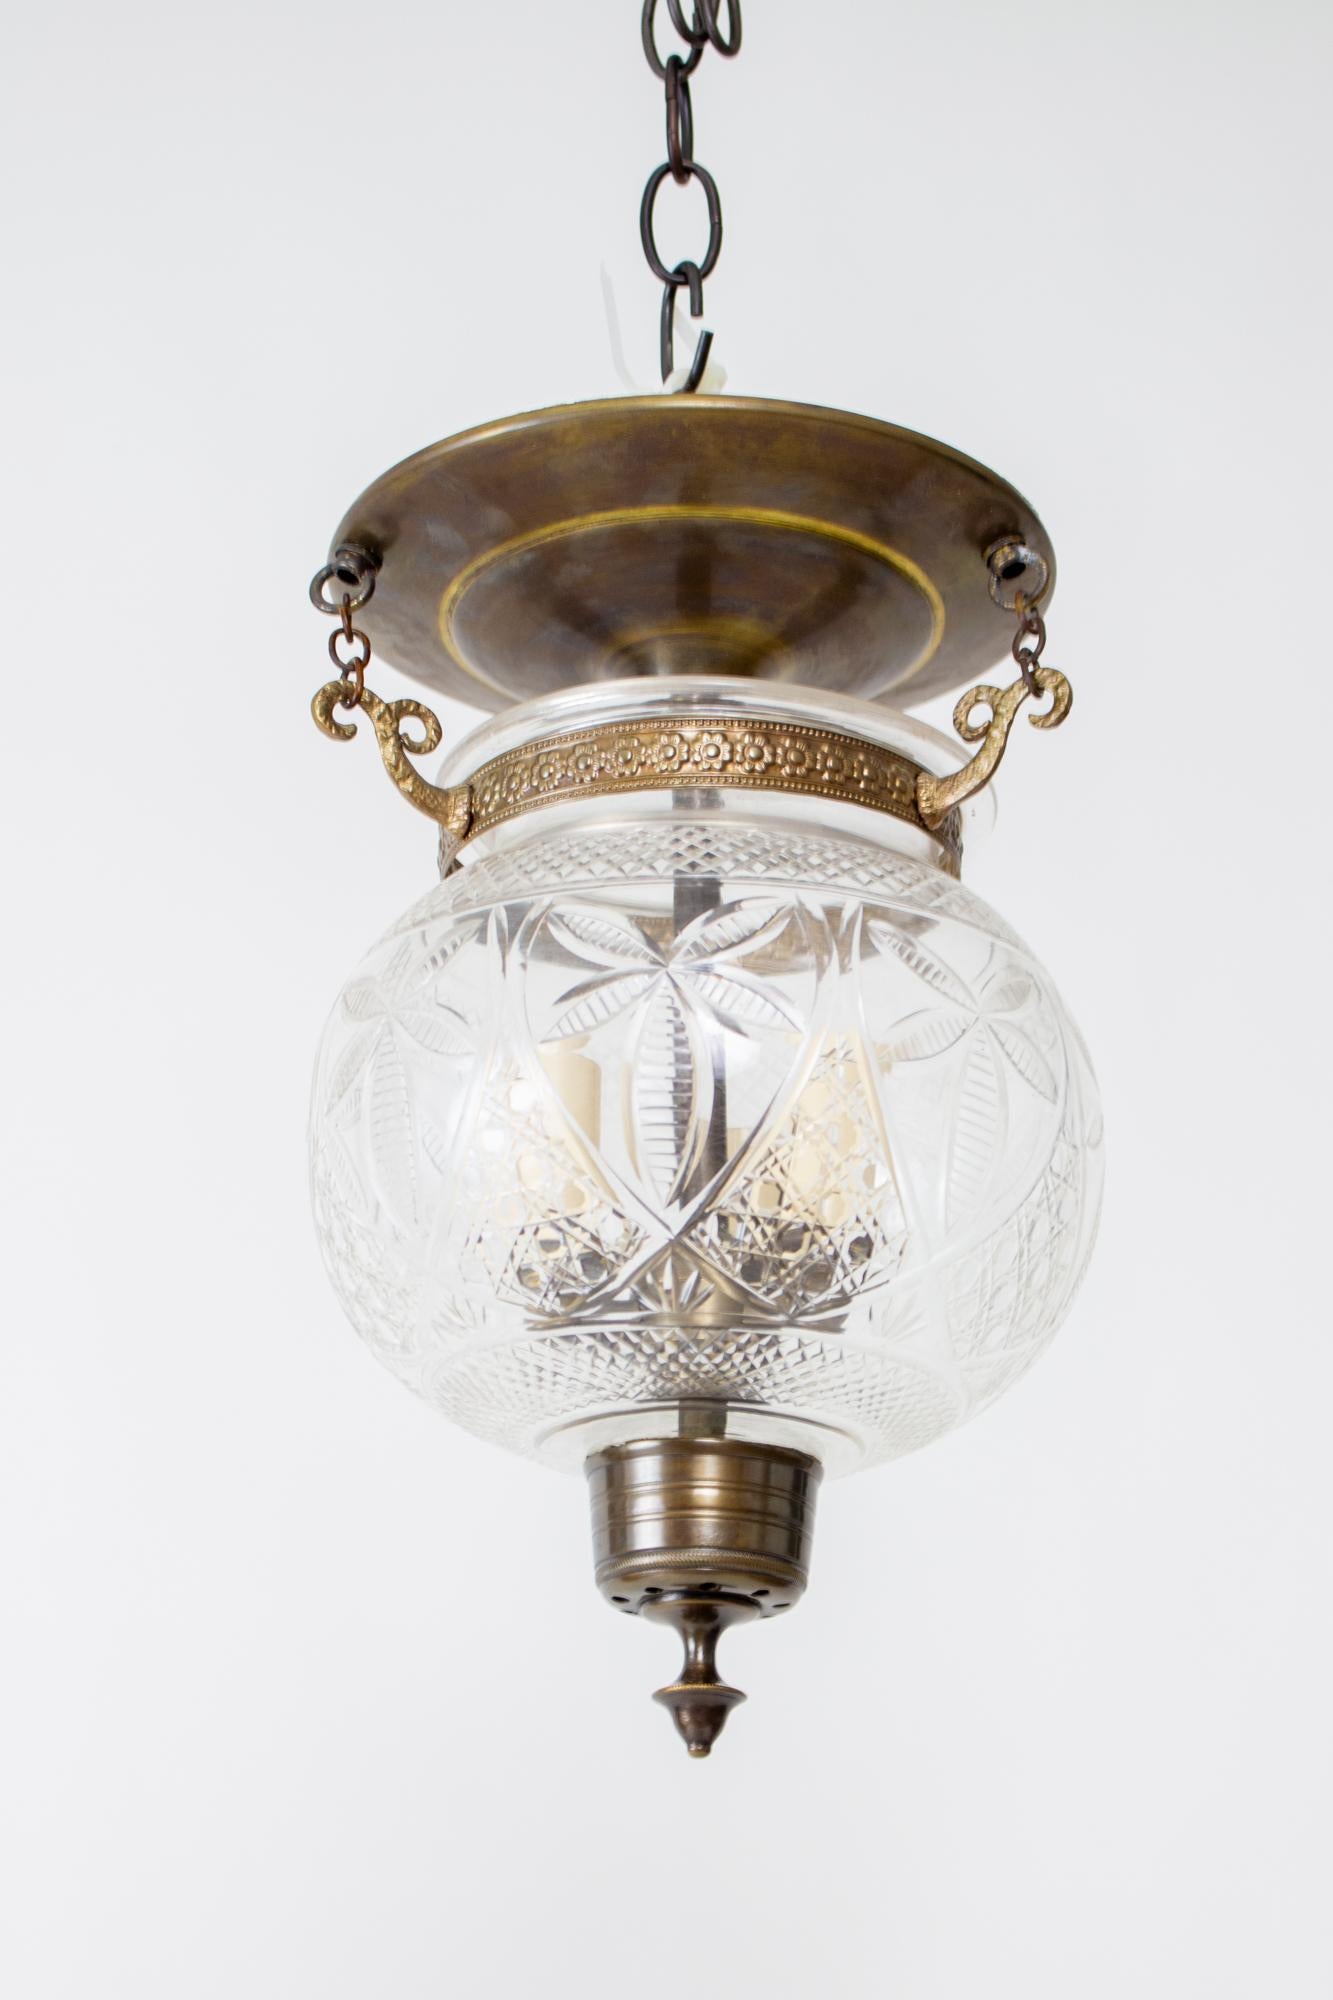 19th Century Bell Jar Lantern With Cross Hatch Pattern 1